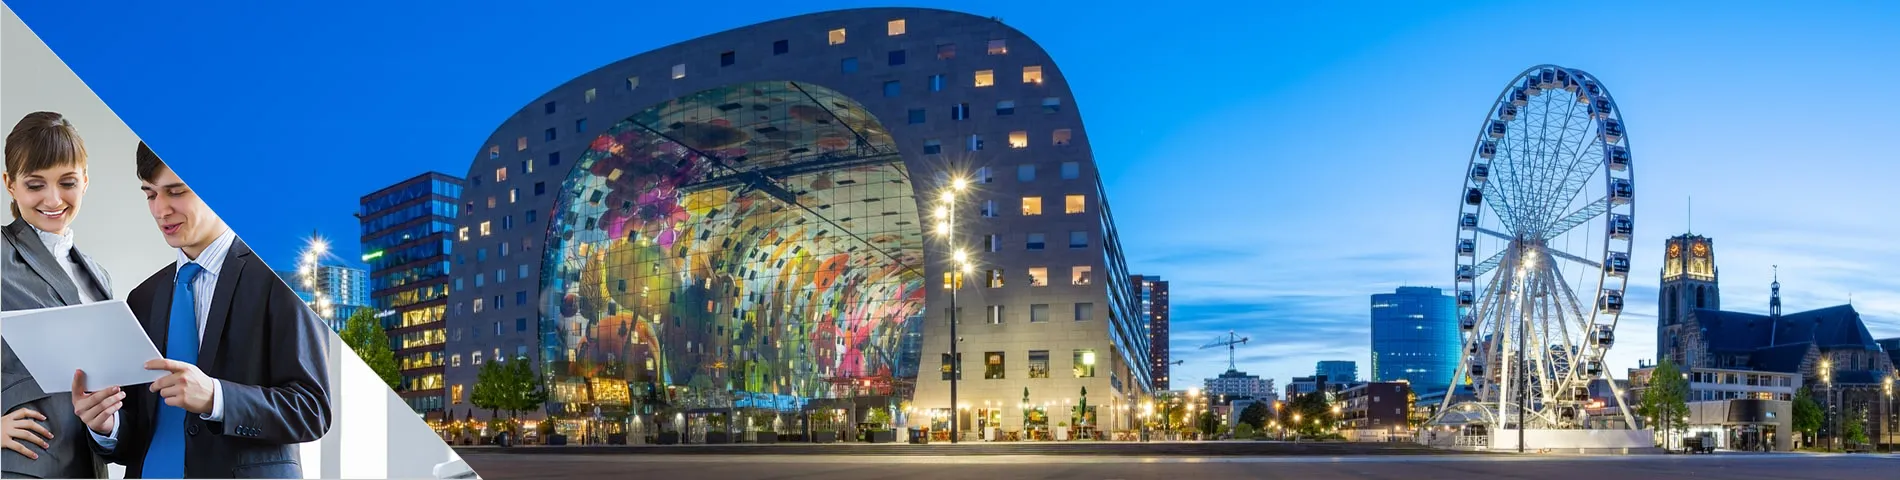 Rotterdam - Biznes Indywidualne